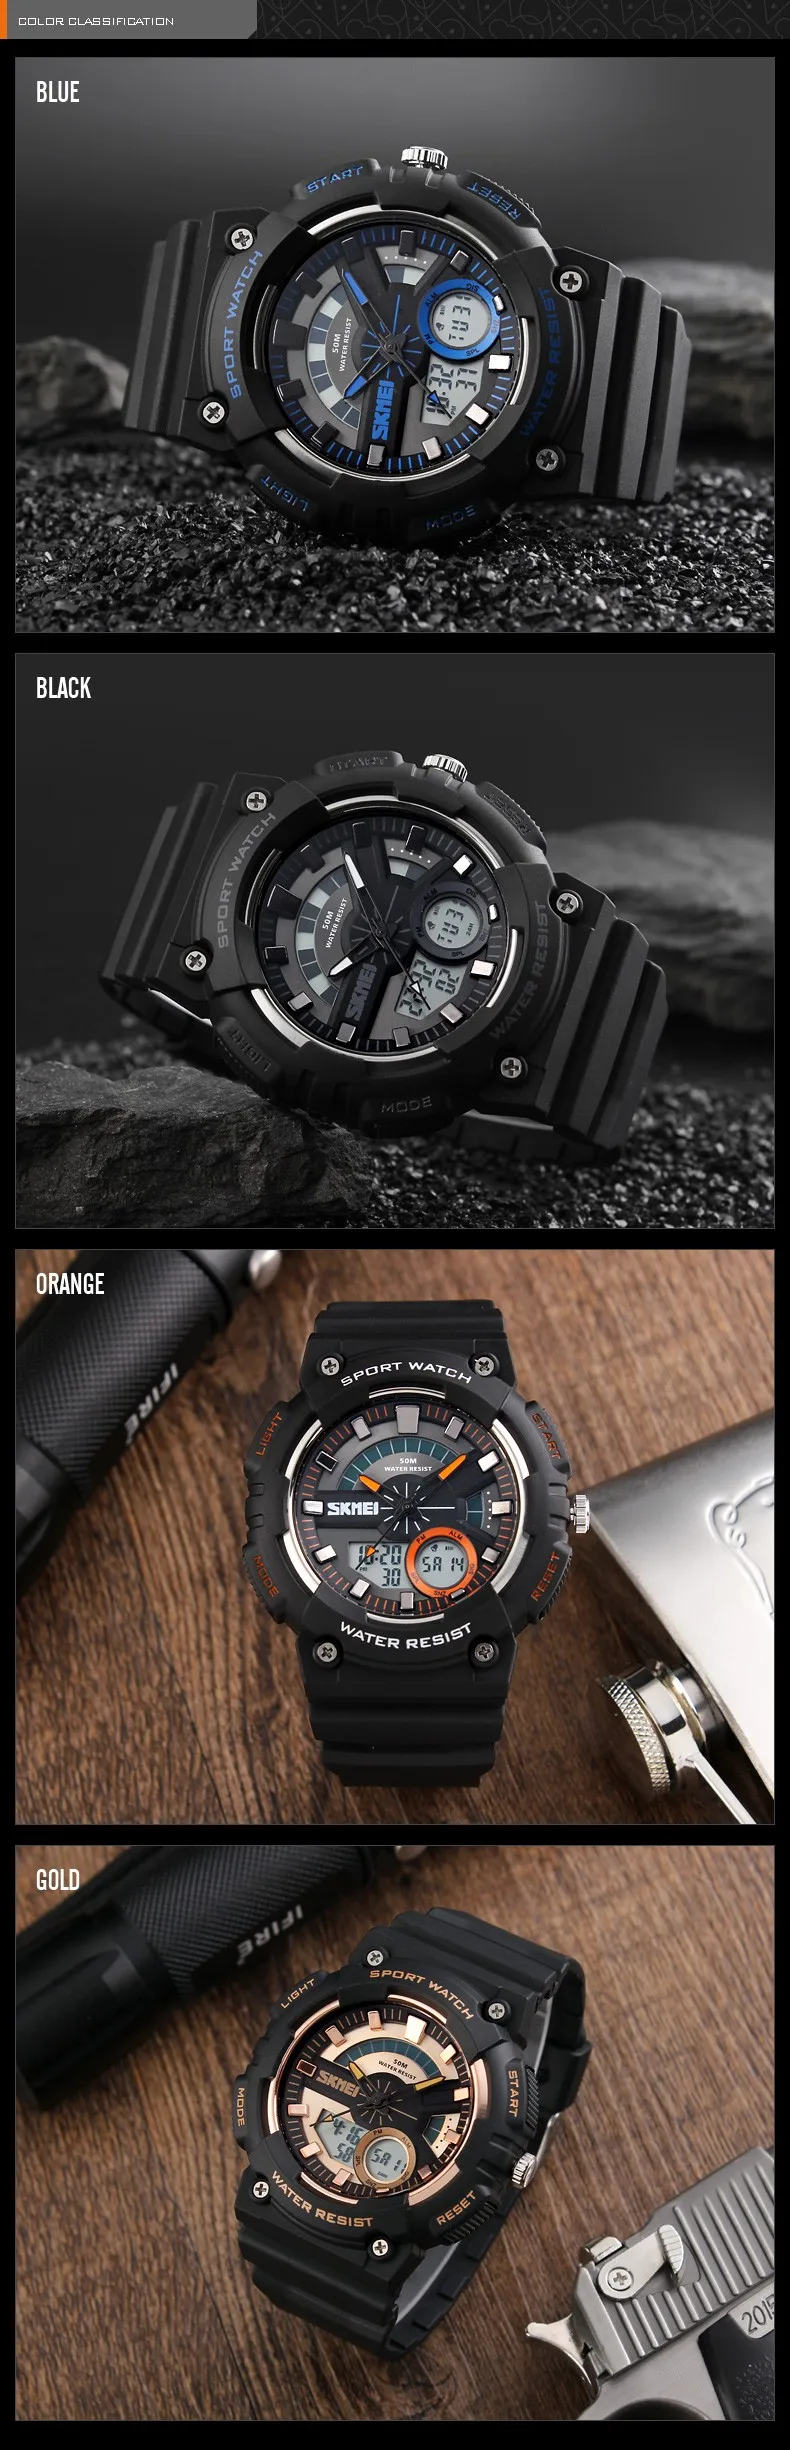 Designer watches online 2017 hot sale 5ATM waterproof analog digital sport watches